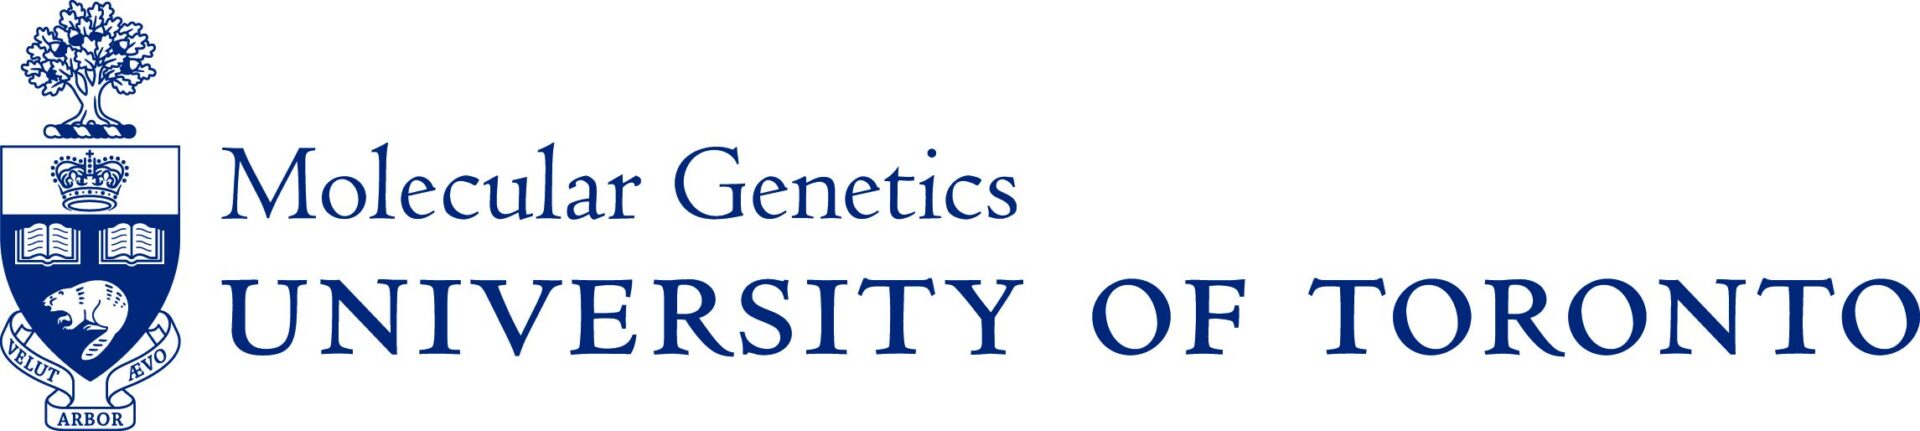 Logotipo da Universidade de Toronto